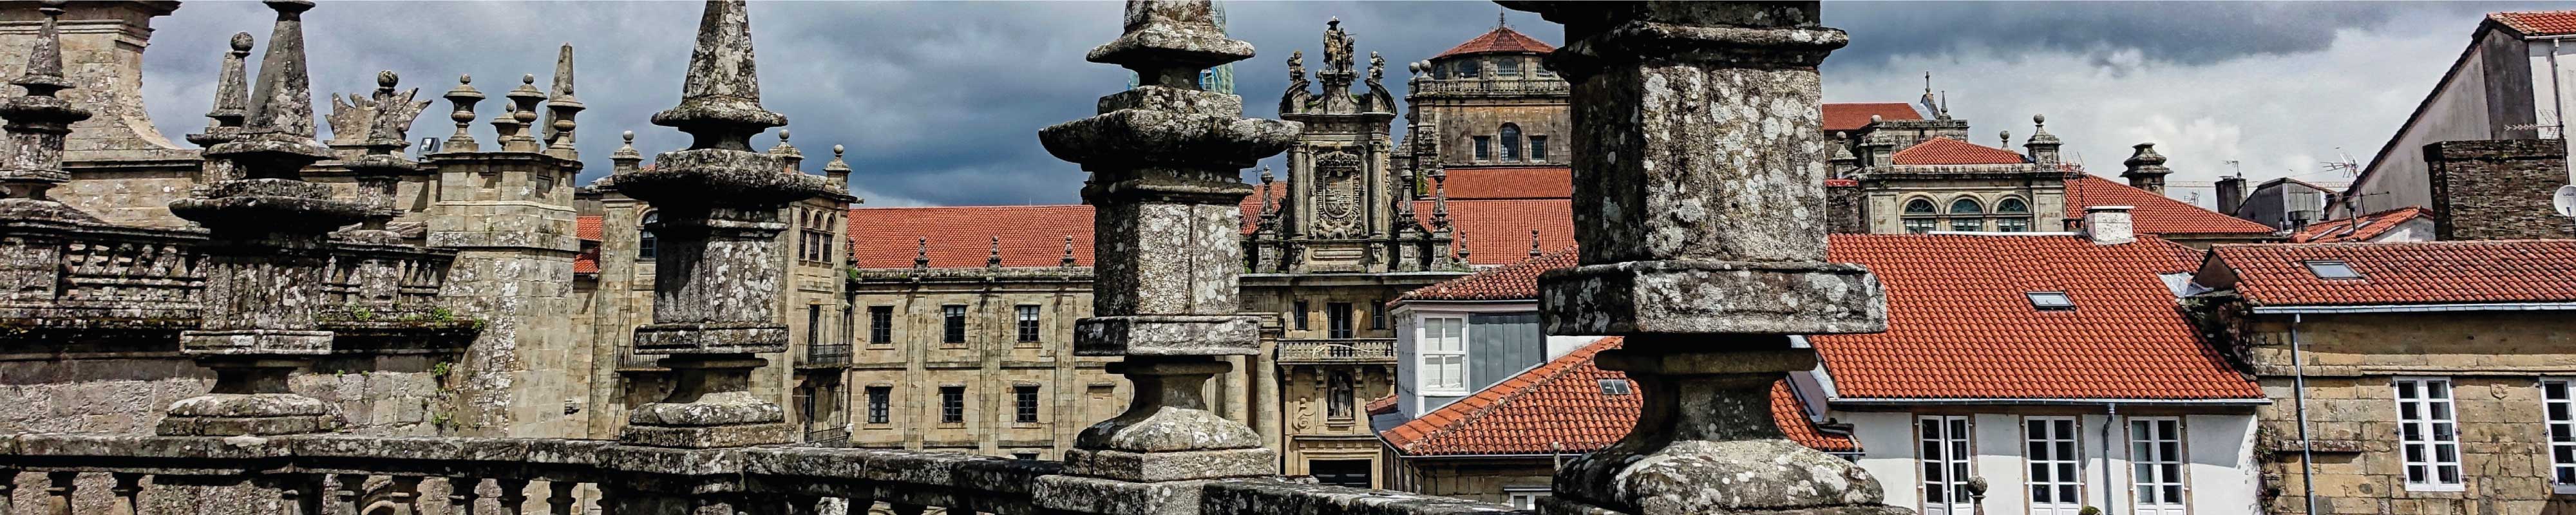 Gepäckaufbewahrung | Santiago de Compostela - Nannybag